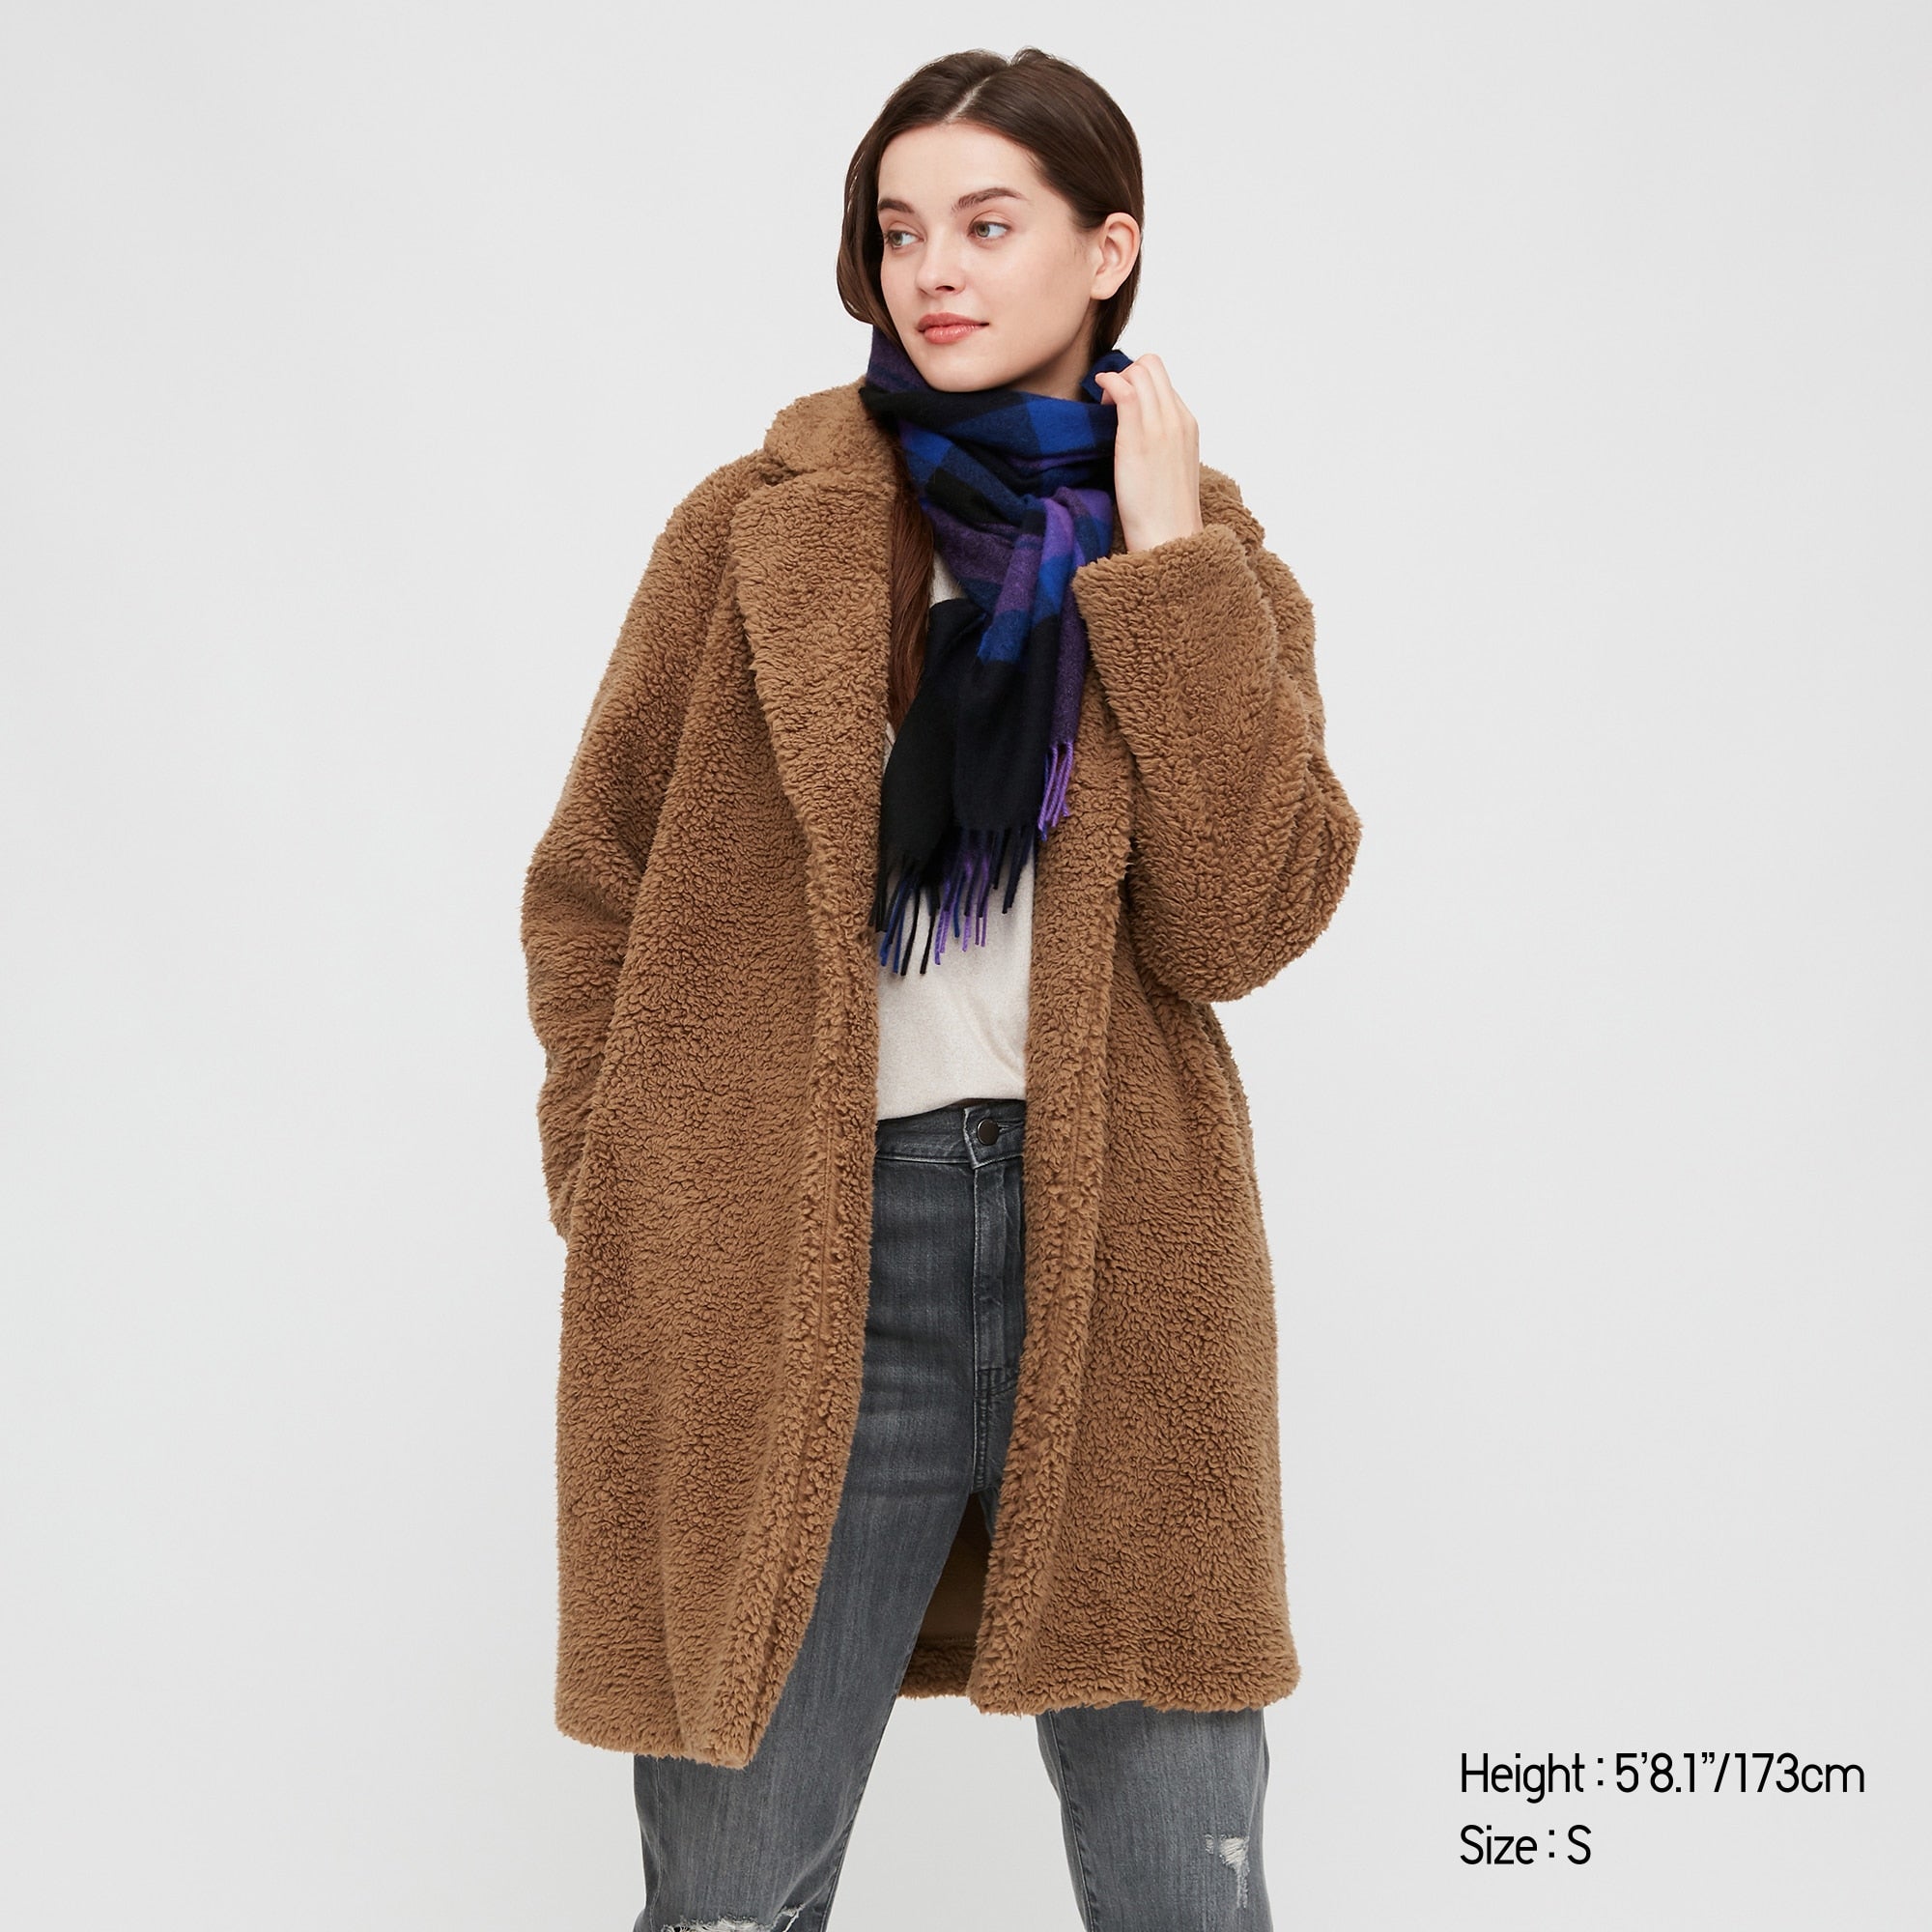 Uniqlo + Pile-Lined Fleece Tailored Coat